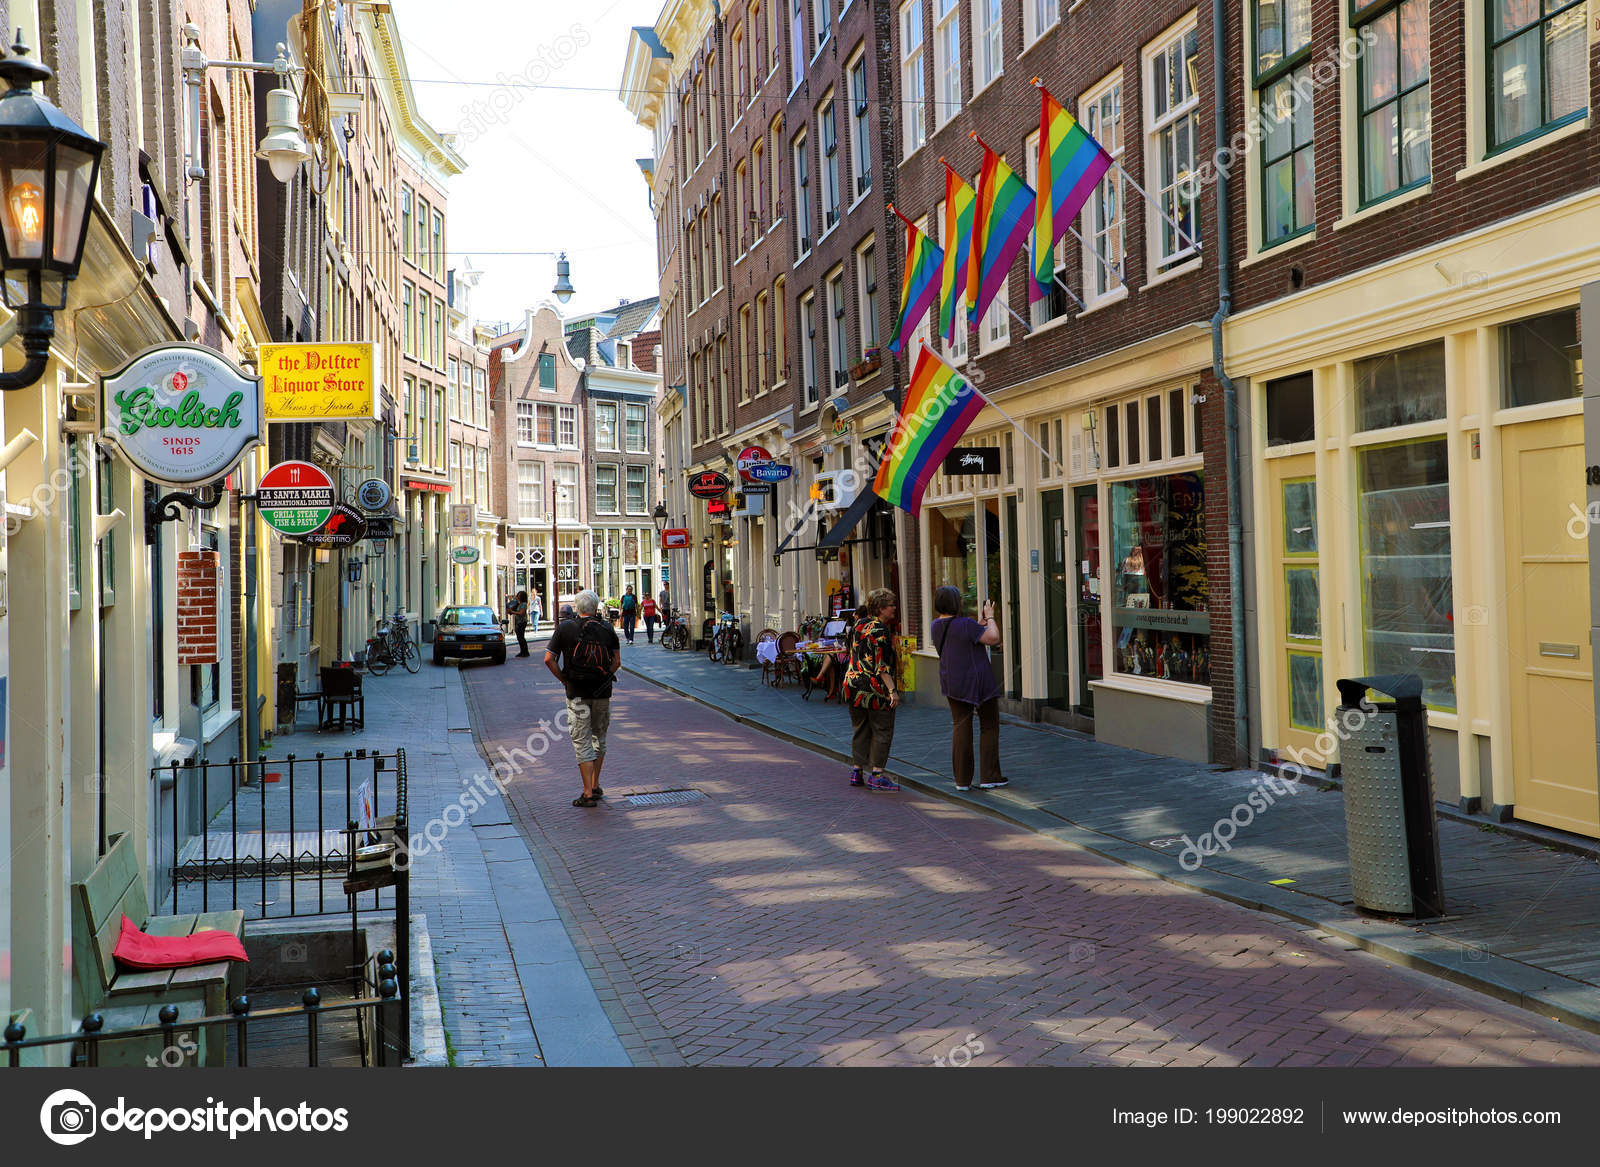 Amsterdam1 May2018 Rainbow Lgbt Flag On Stock Photo 1146110516